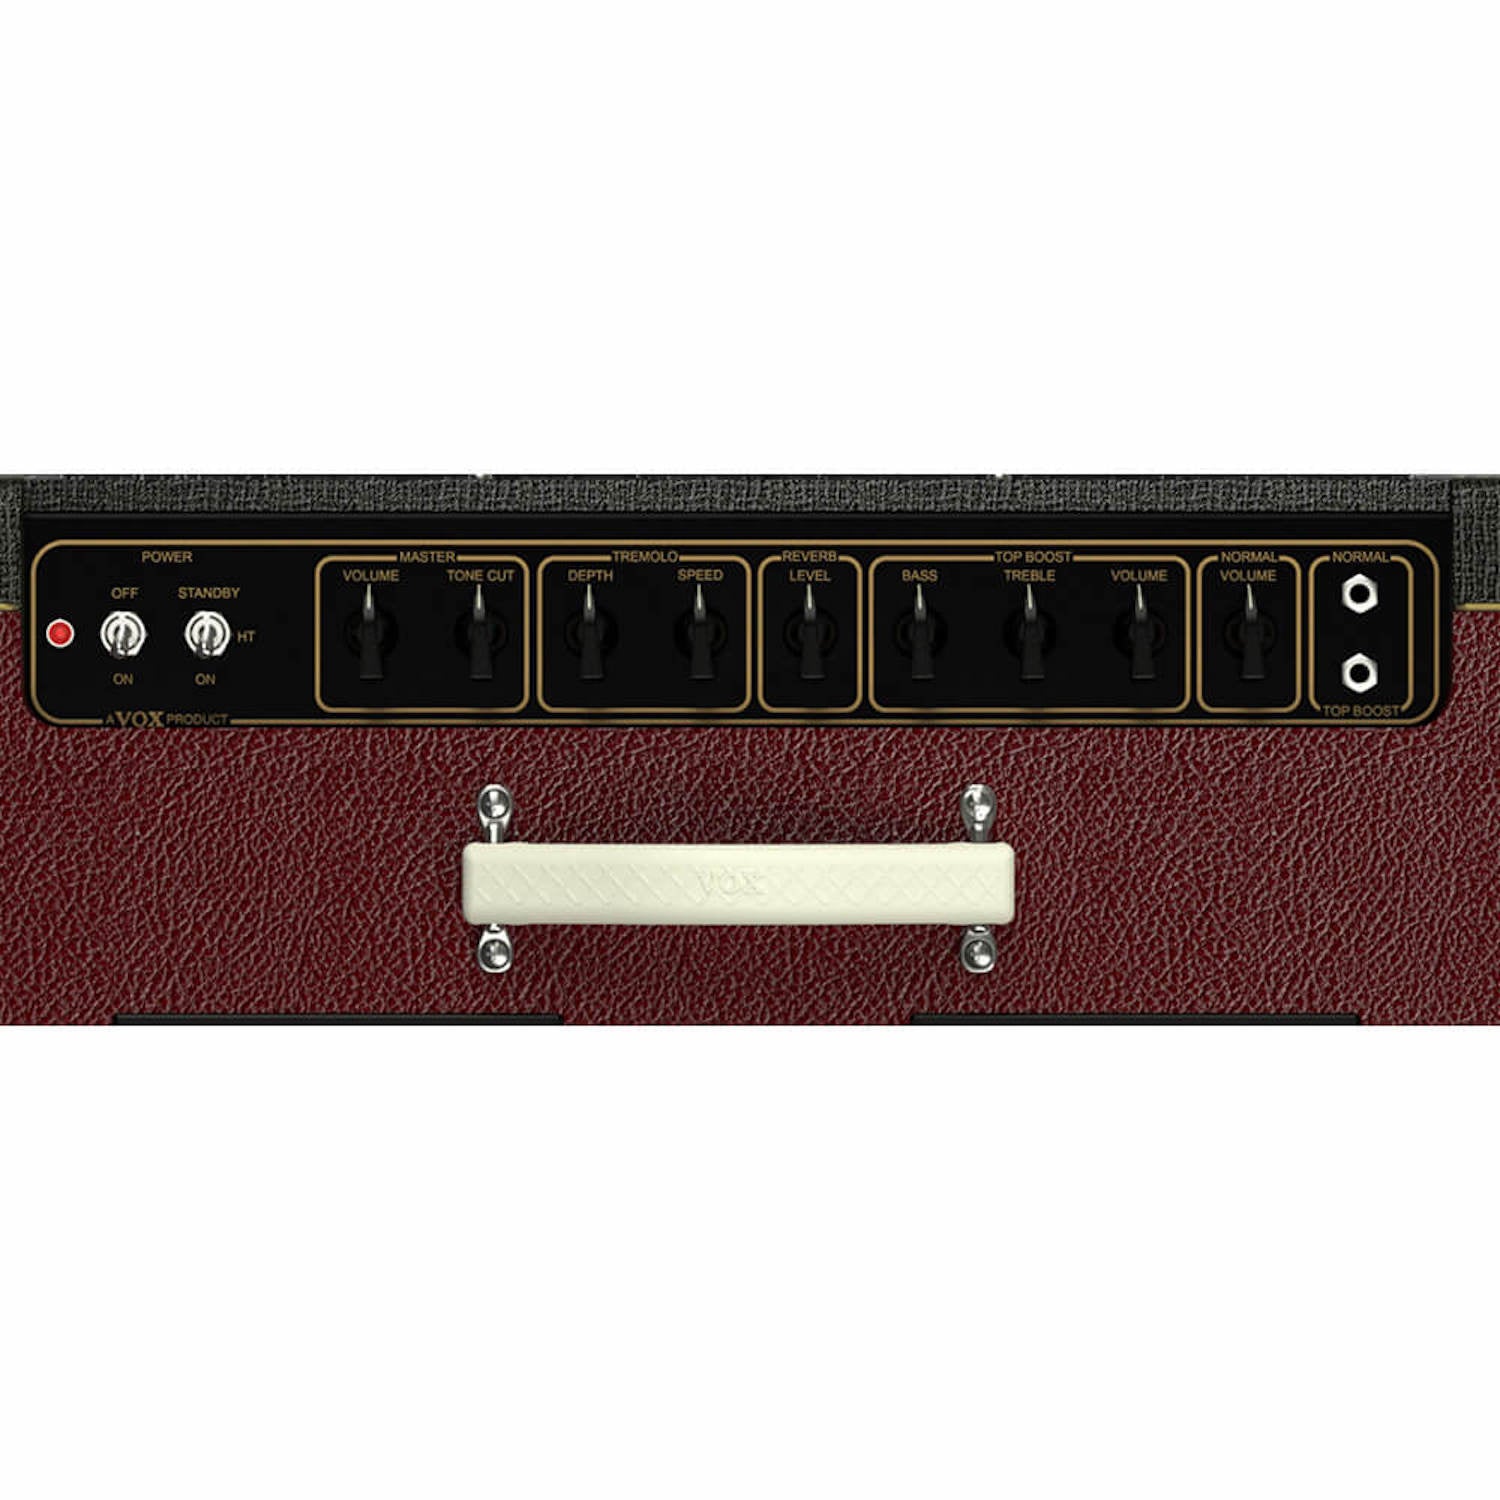 Vox AC15C1-TTBM Two Tone Black and Maroon Guitar Amplifier